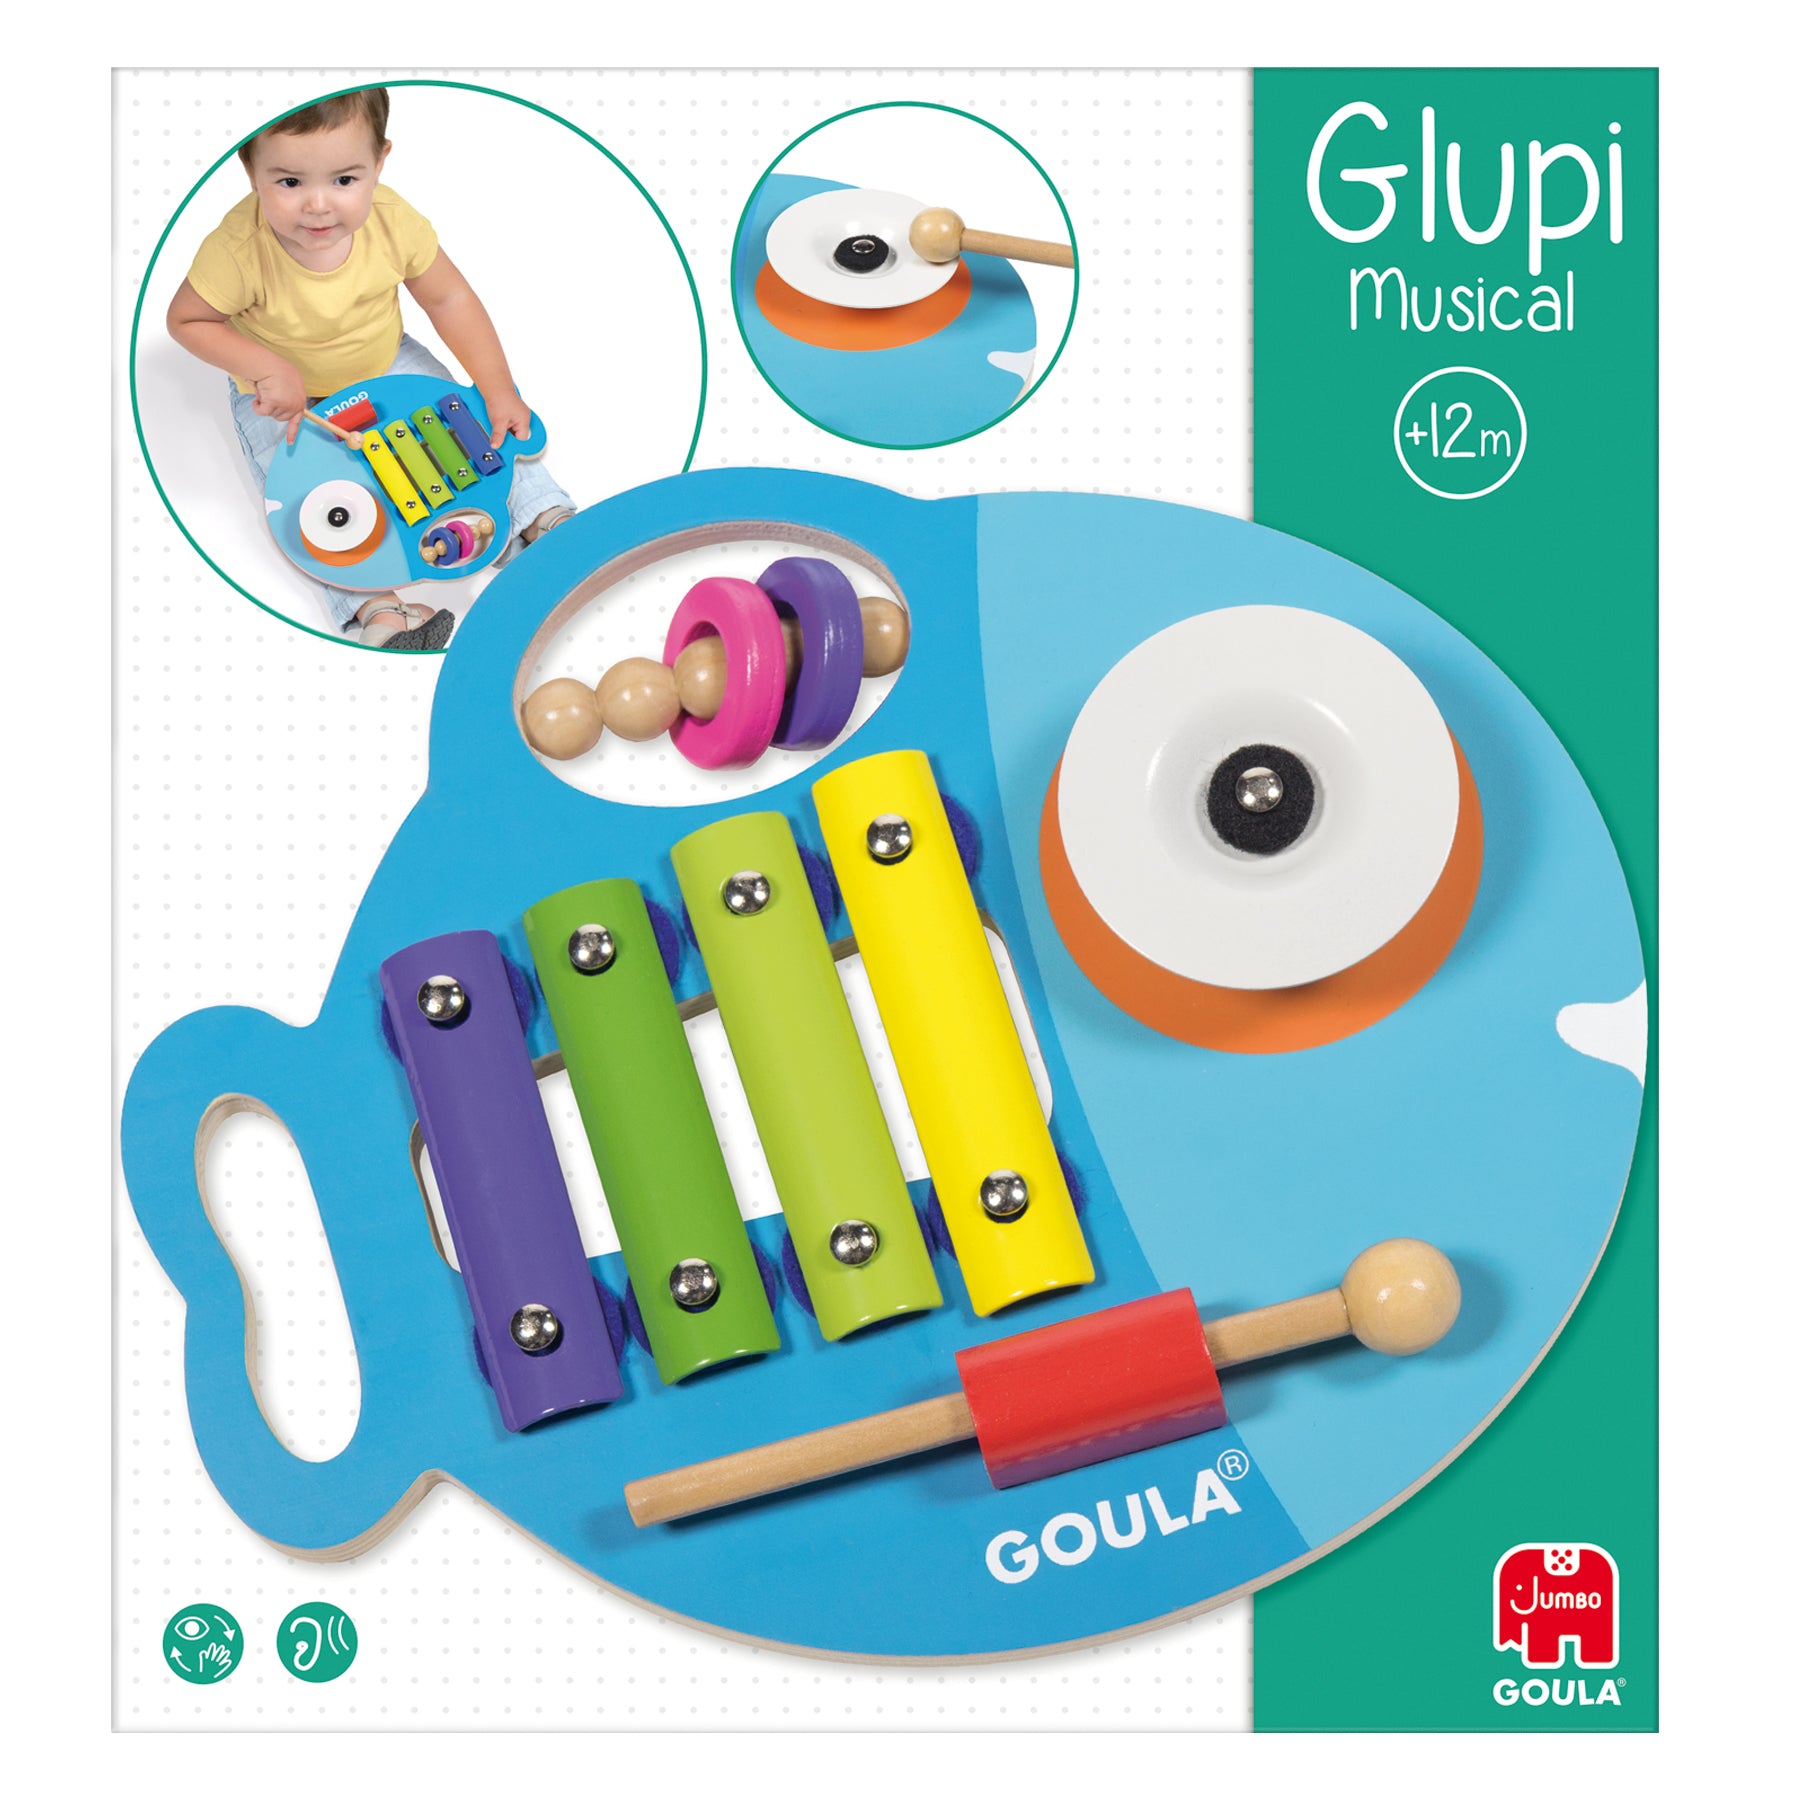 Glupi musical 3 in 1 - product image - Jumboplay.com